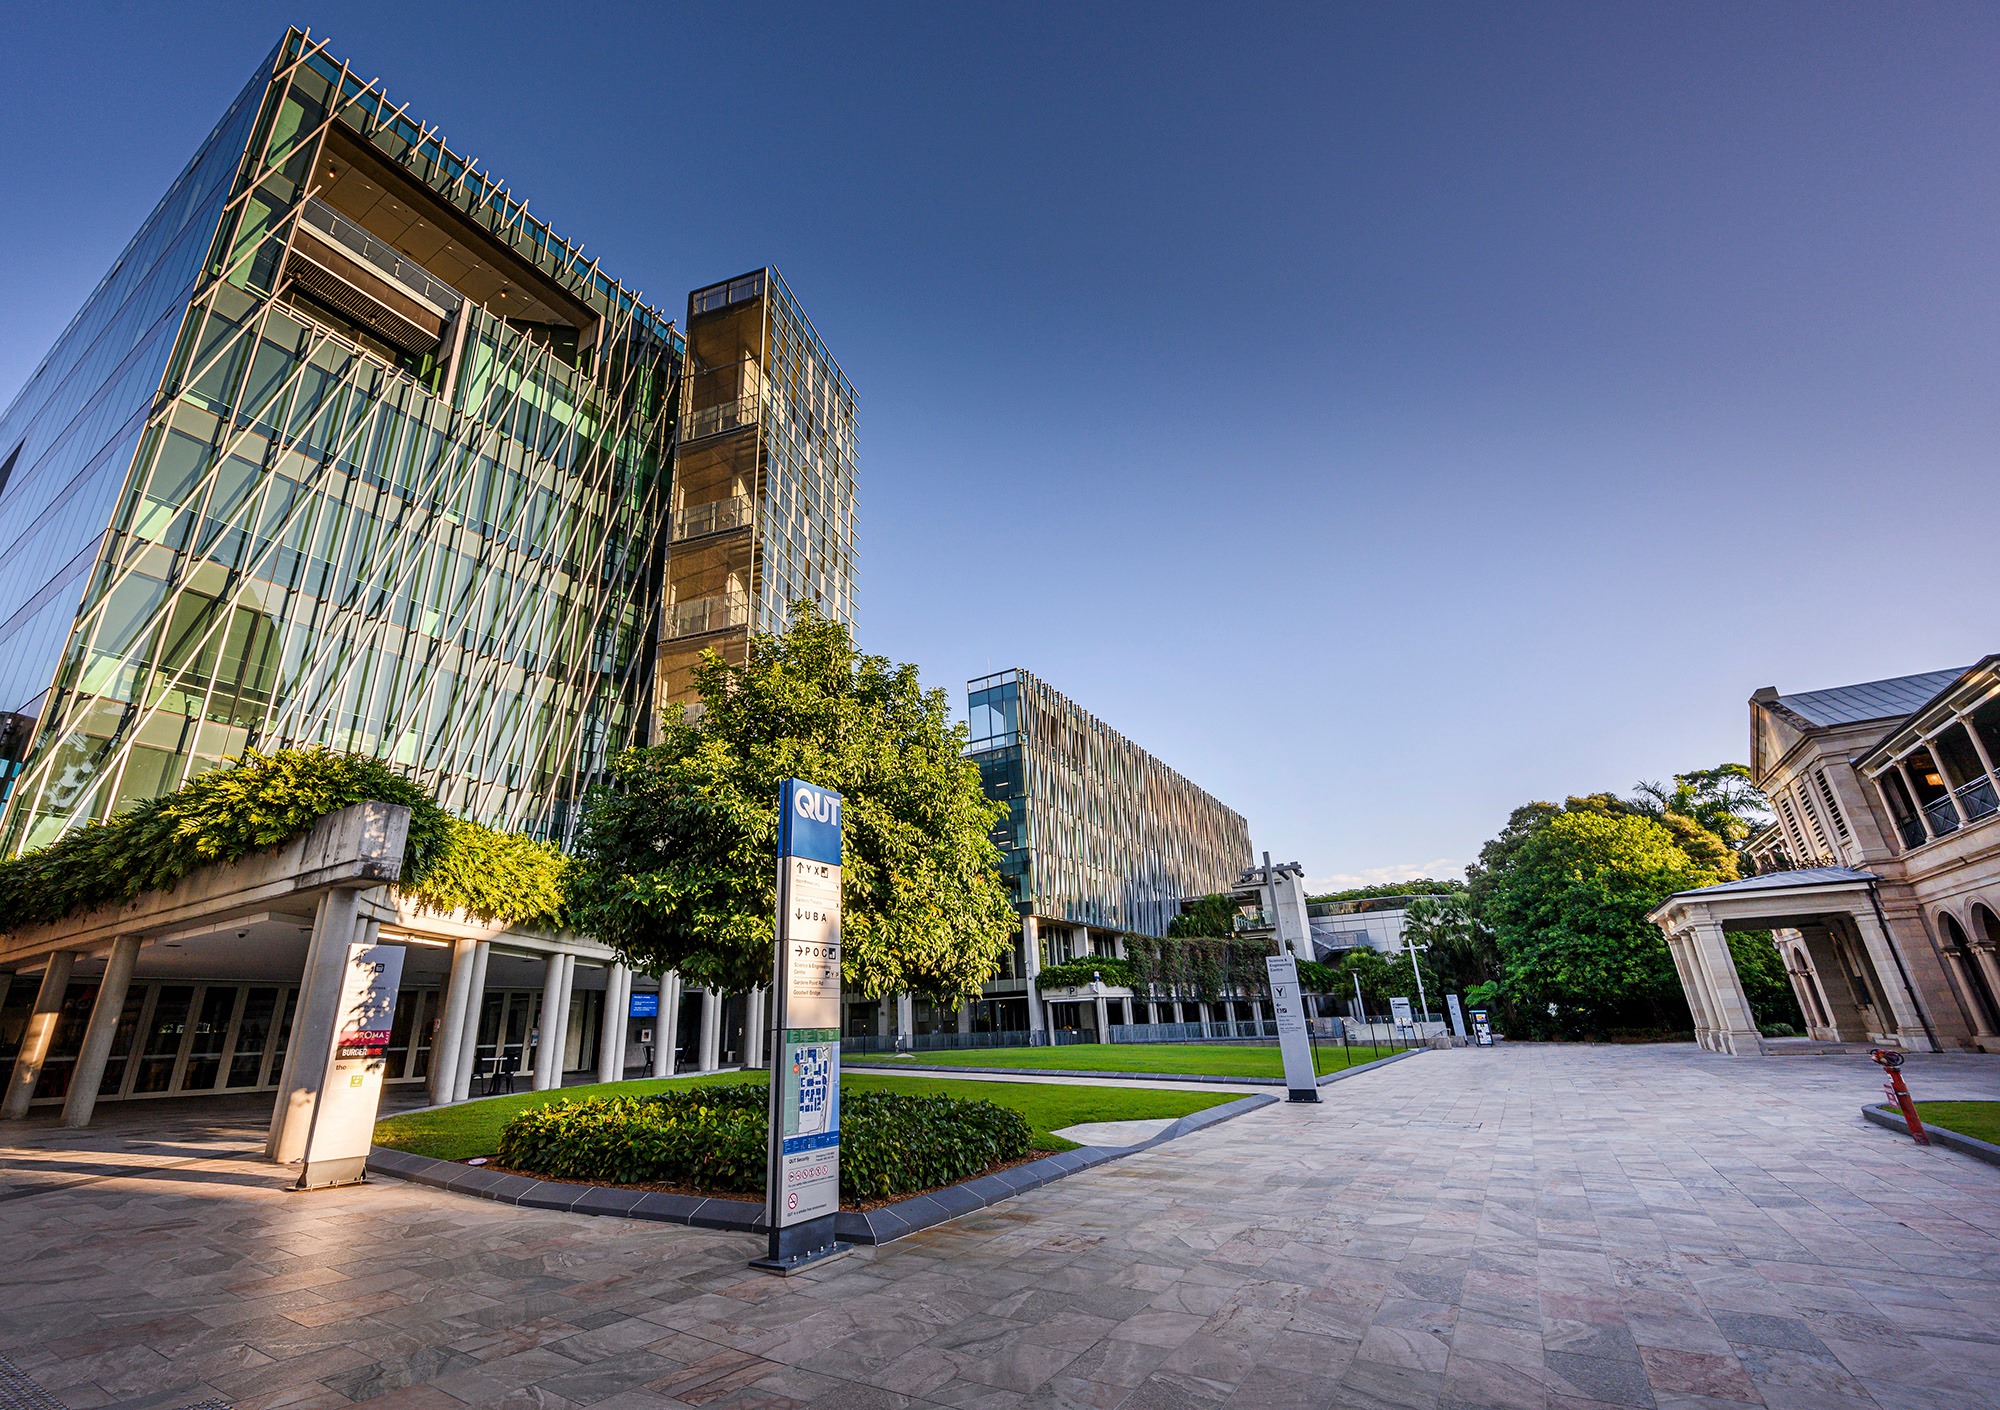 Queensland University of Technology - 昆士蘭科技大學(QUT)